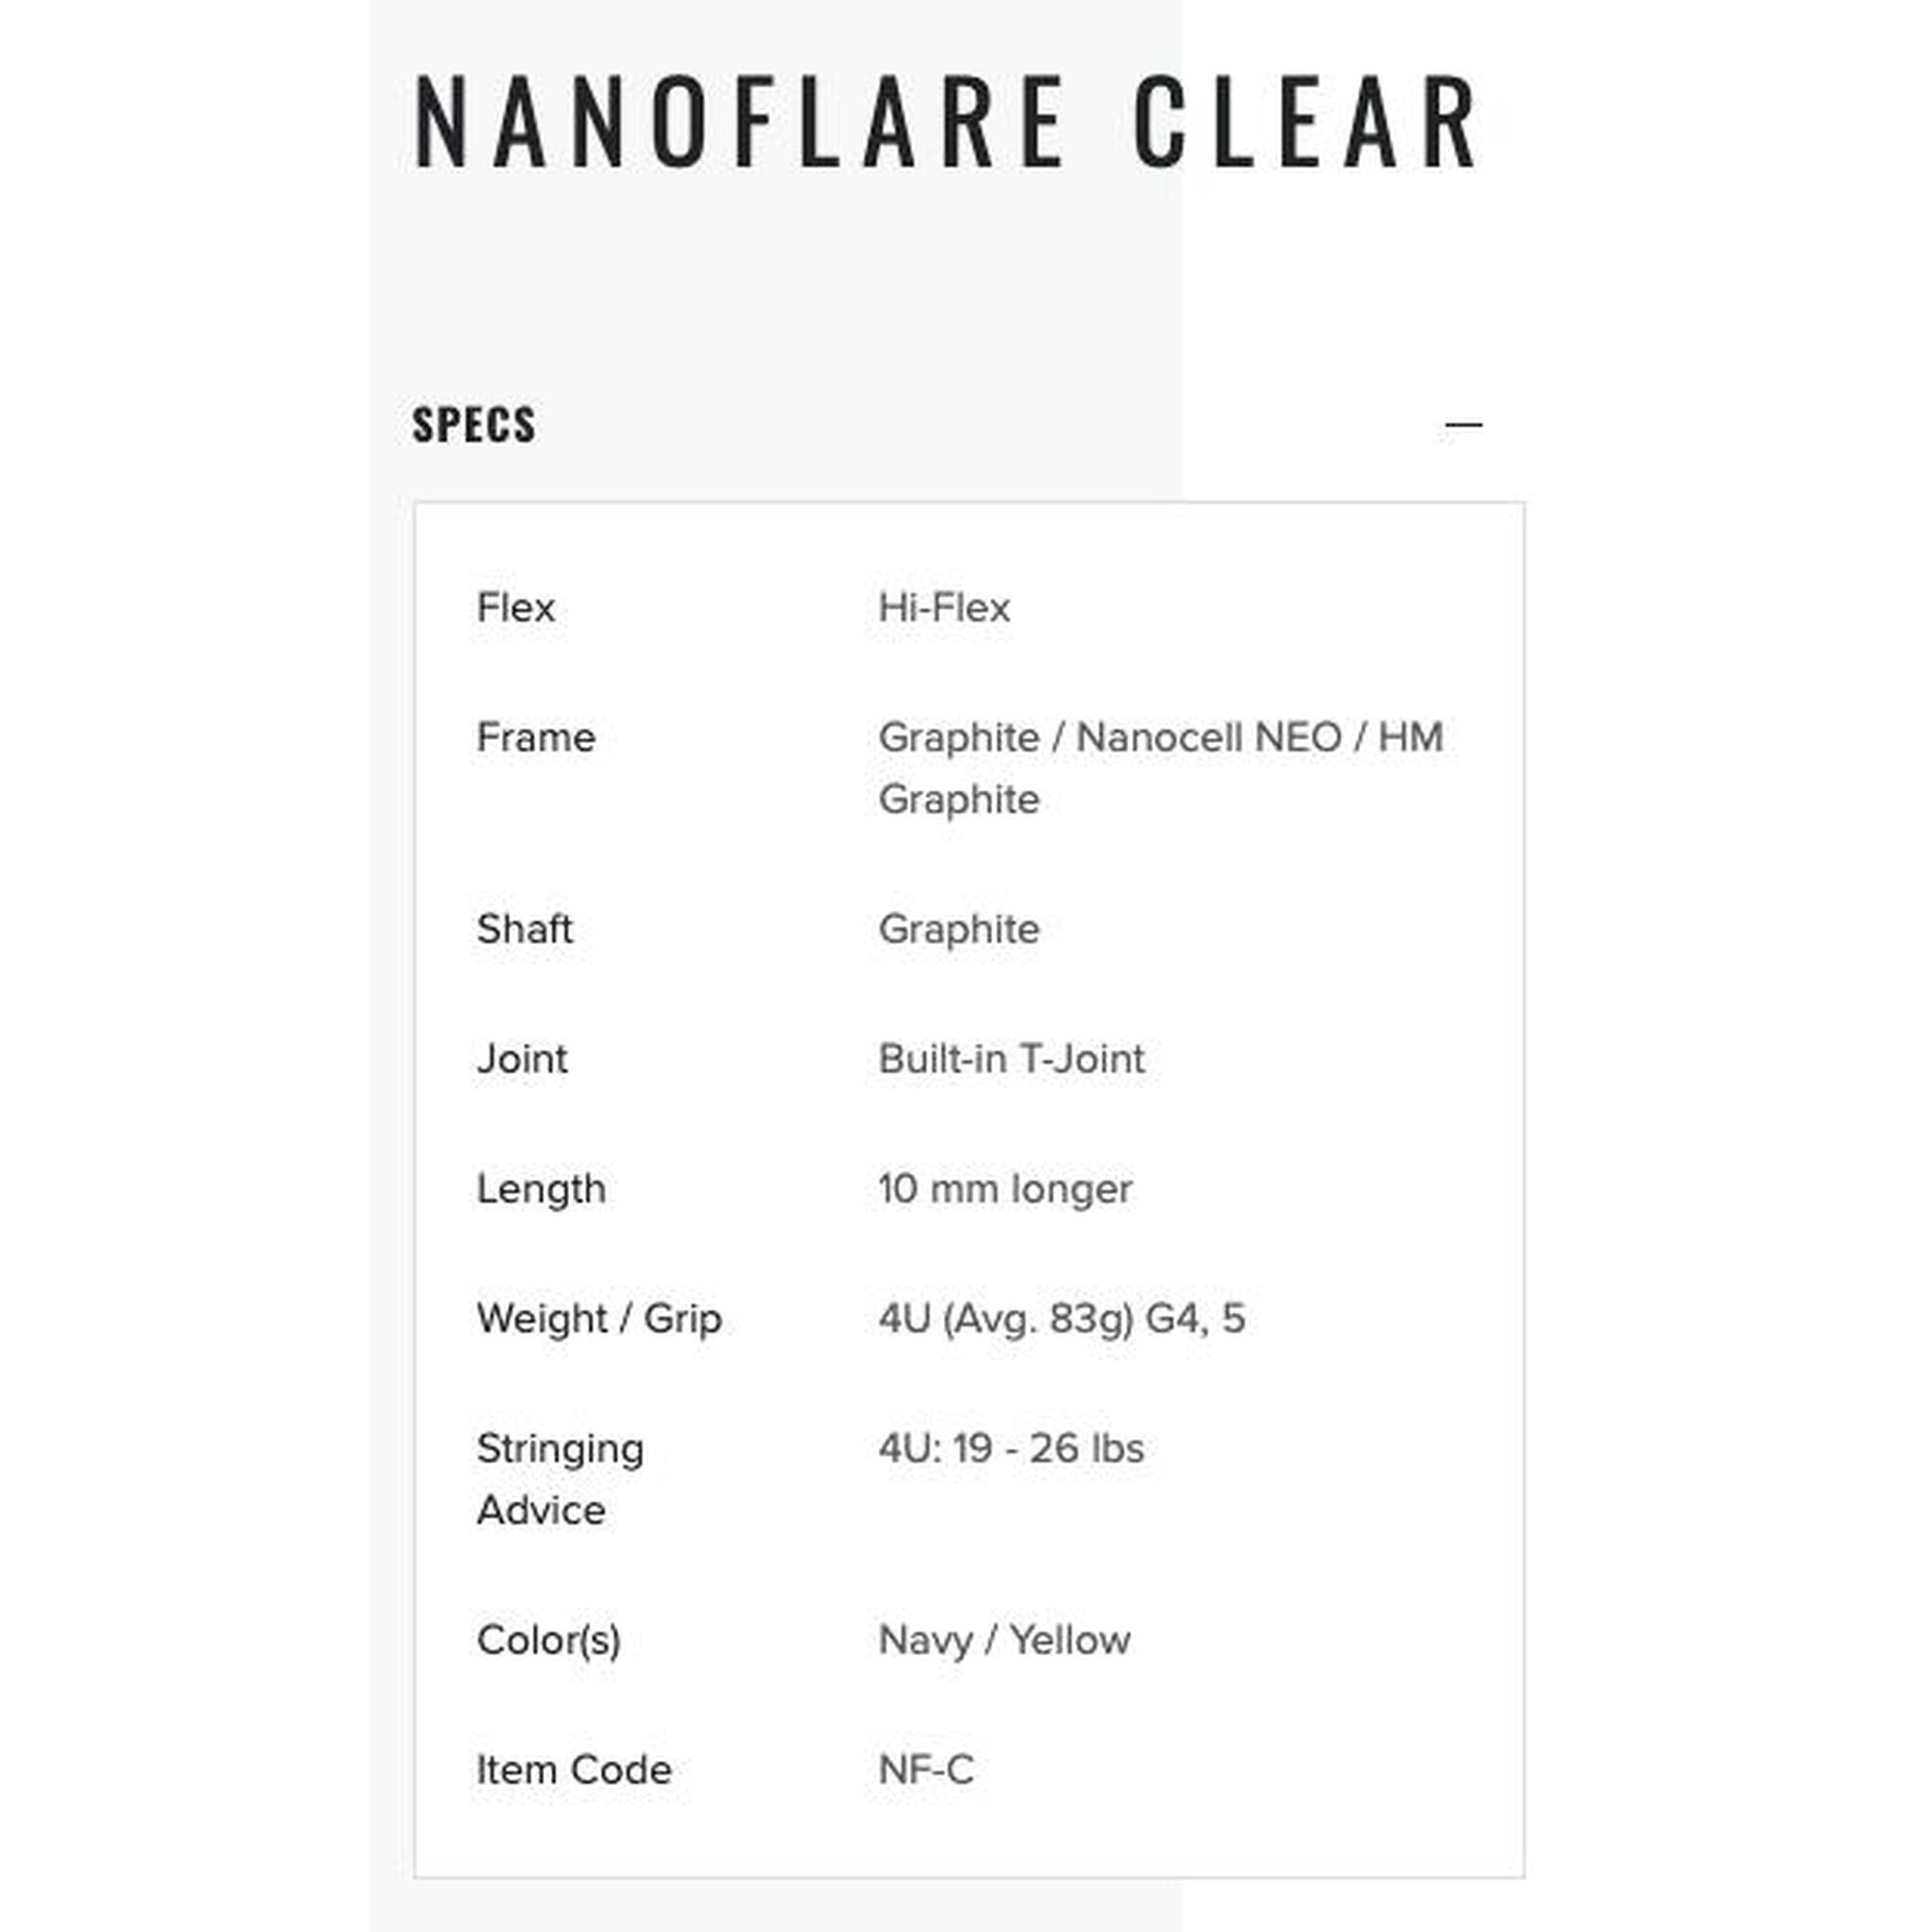 Nanoflare Clear Adult Badminton Racket (Strung) - Navy/Yellow